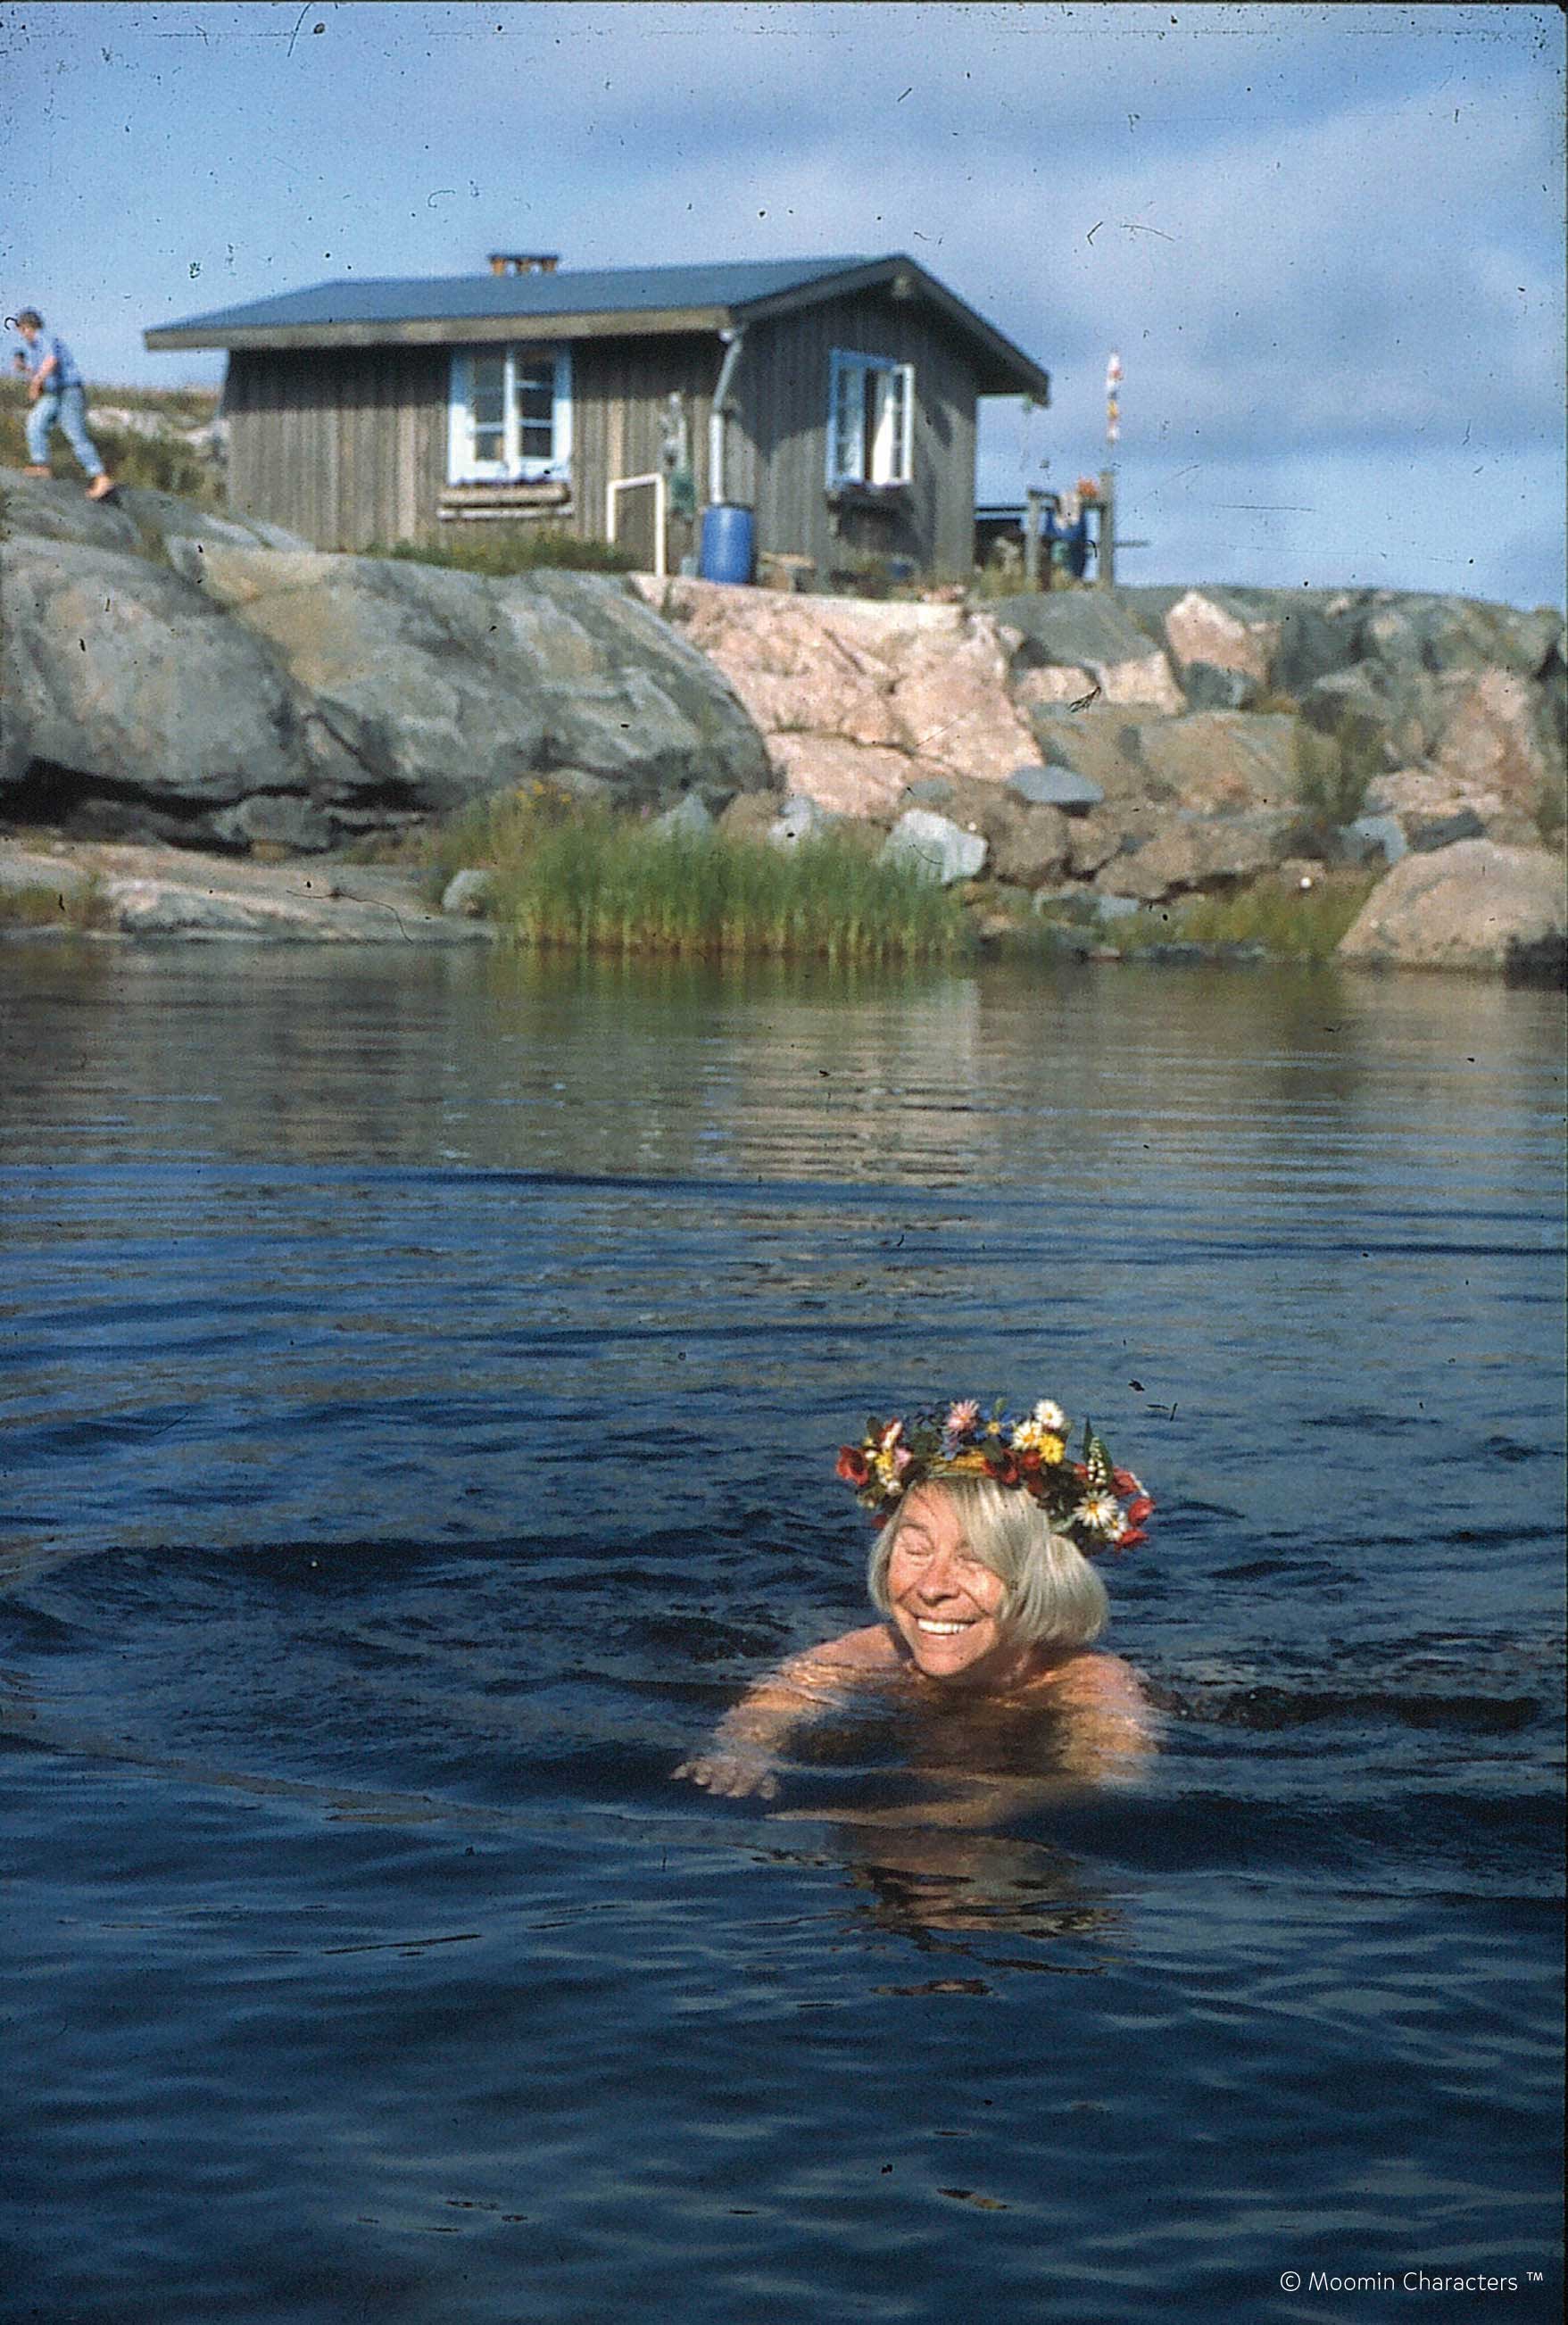 Tove Jansson swimming with her birthday flower crown on Klovharun.